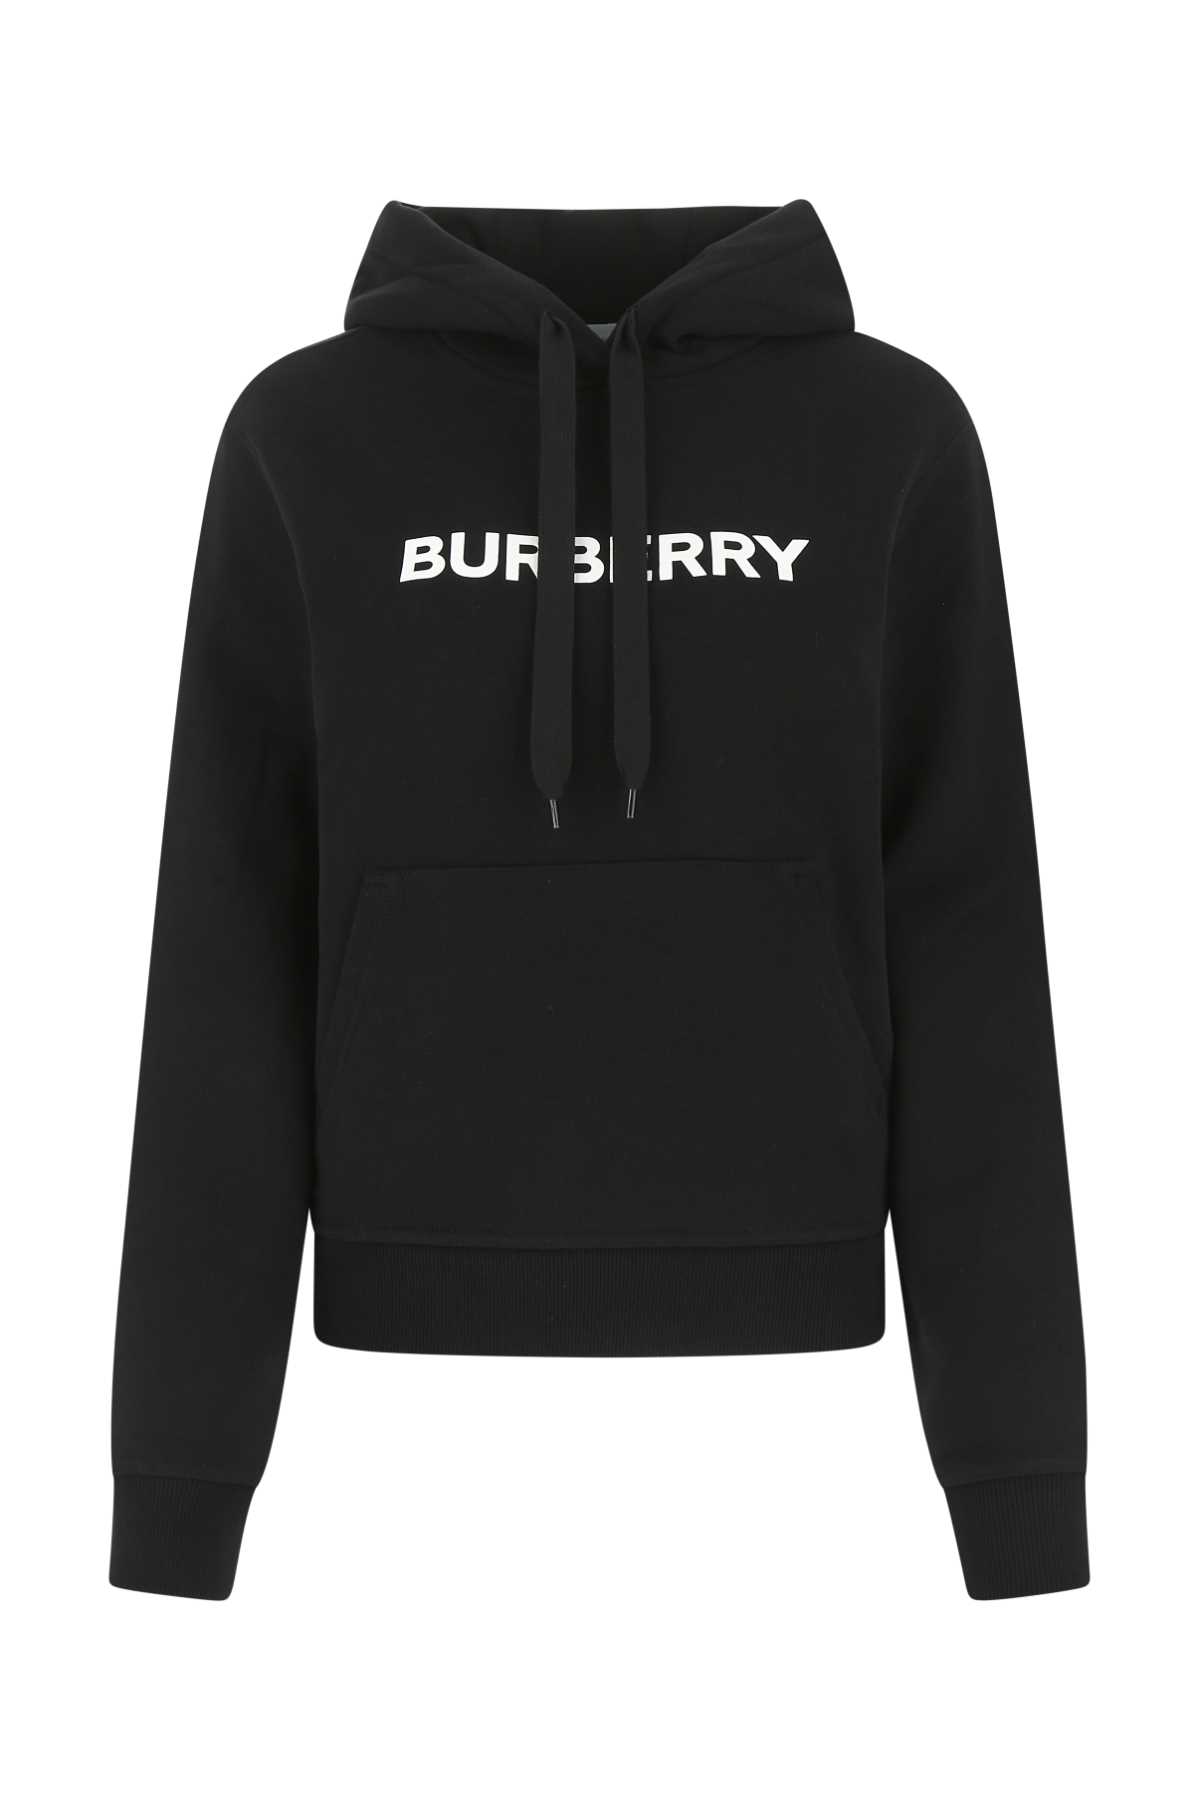 Burberry Black Cotton Oversize Sweatshirt In A1189